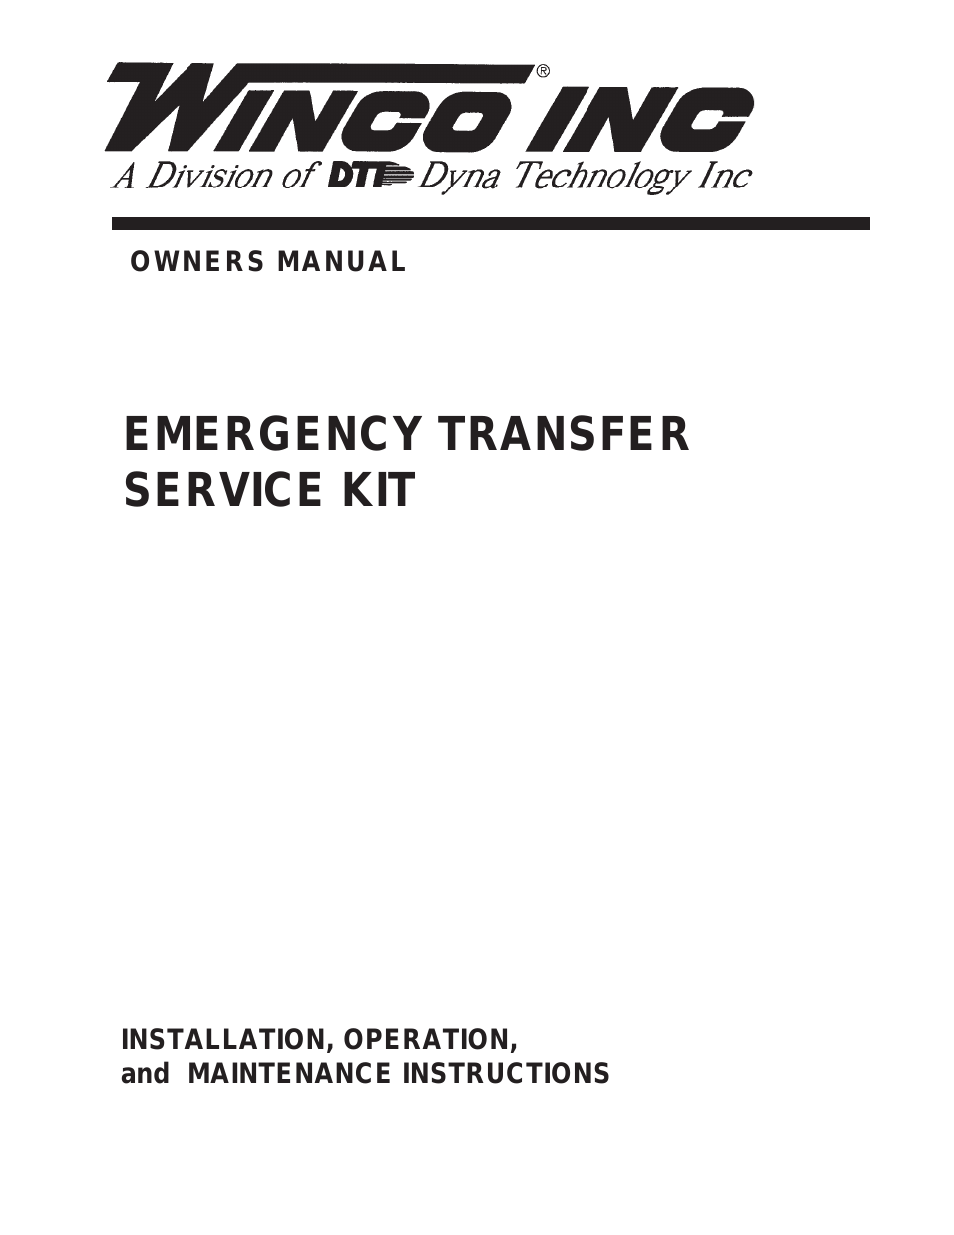 EMERGENCY TRANSFER SERVICE KIT